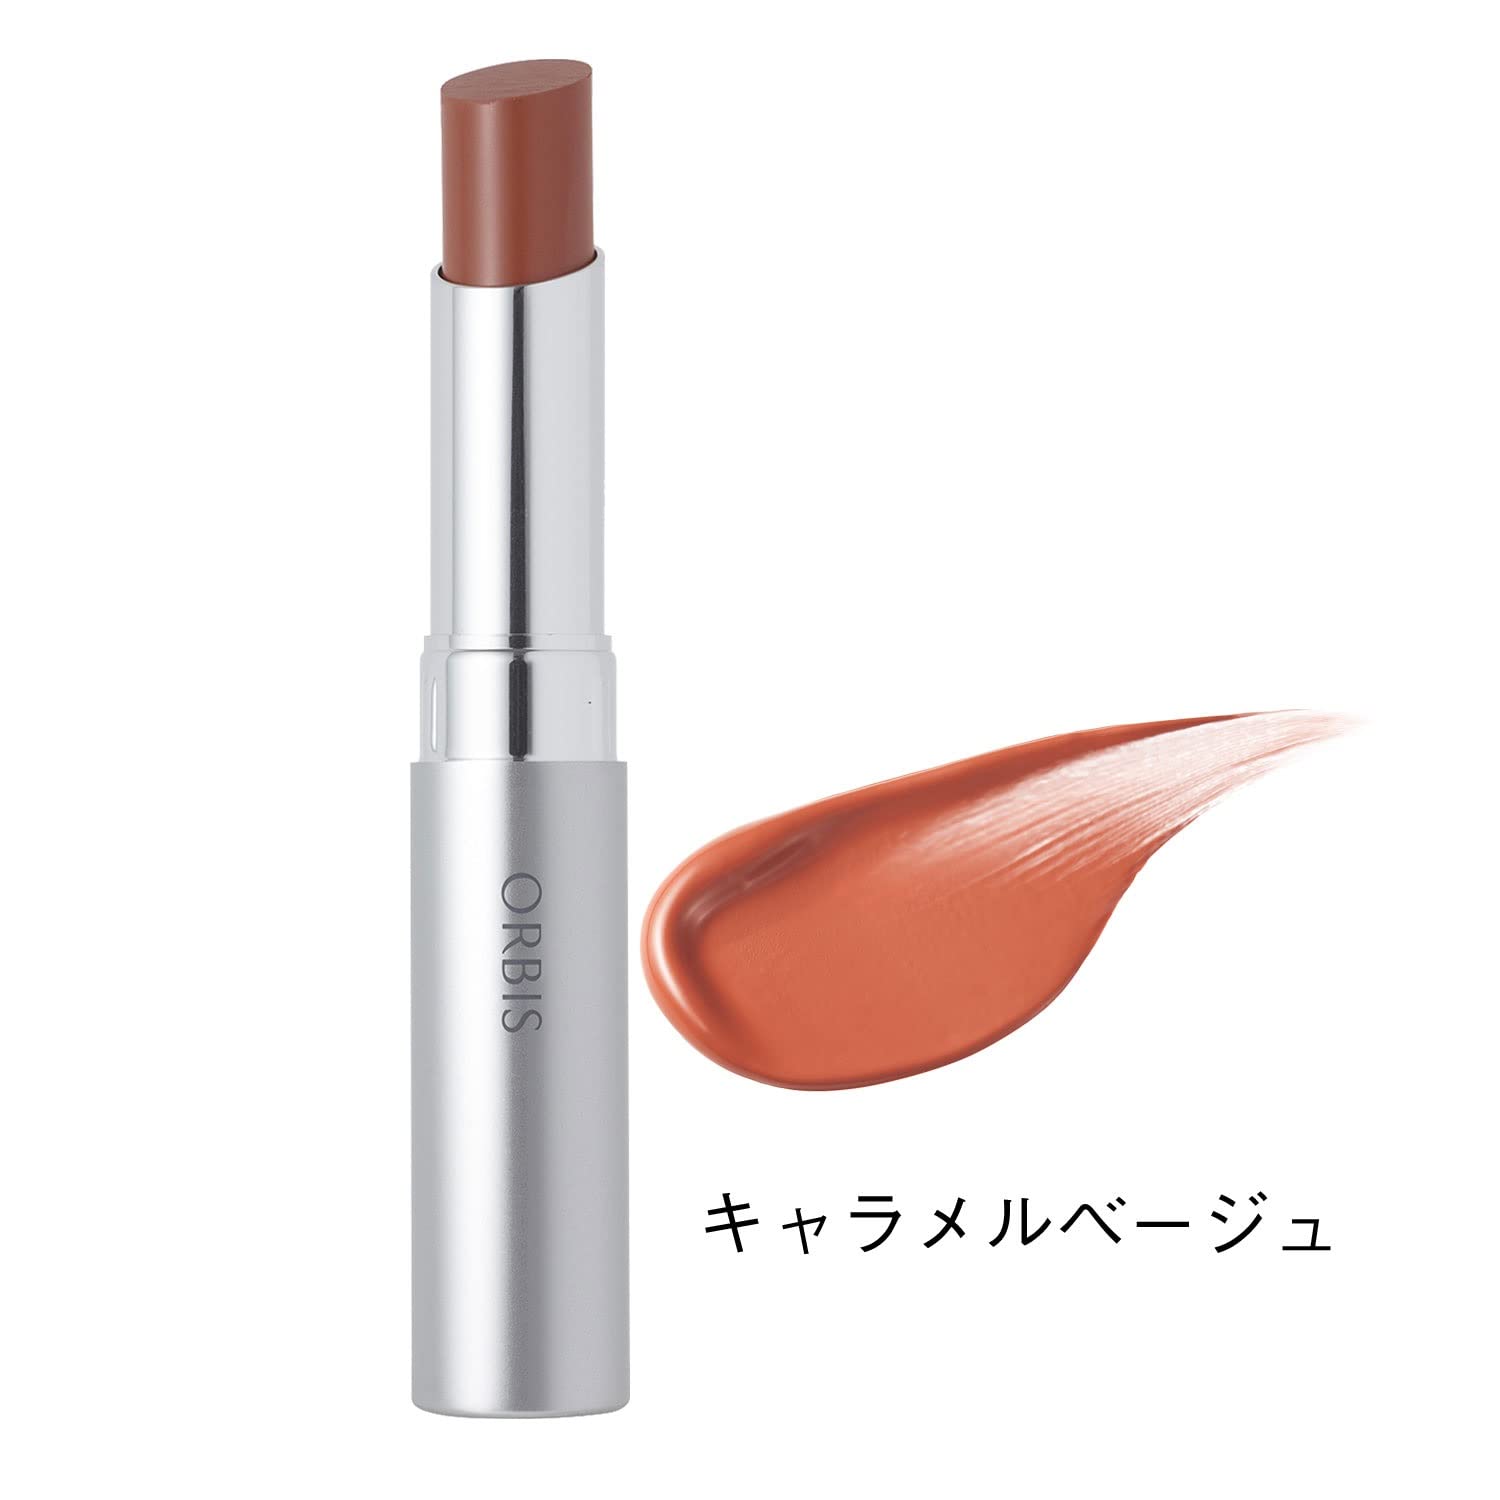 Isehan Kiss Me Ferme Red Brush Tin Rouge 04 1.9g - Japanese Tint Lipstick - Lips Makeup